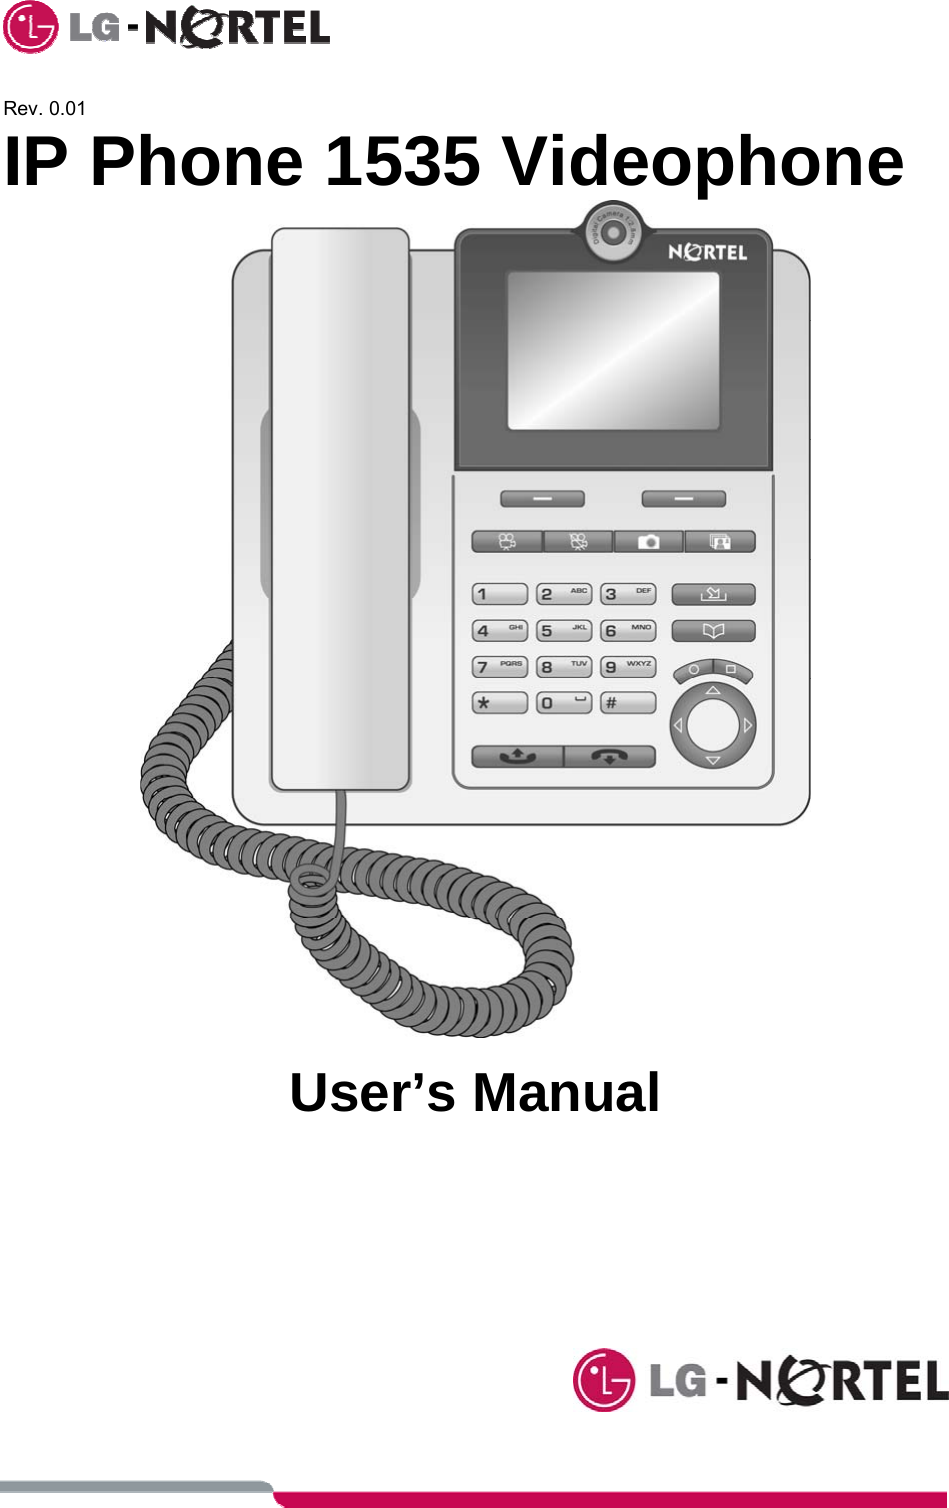        Rev. 0.01 IP Phone 1535 Videophone   User’s Manual             